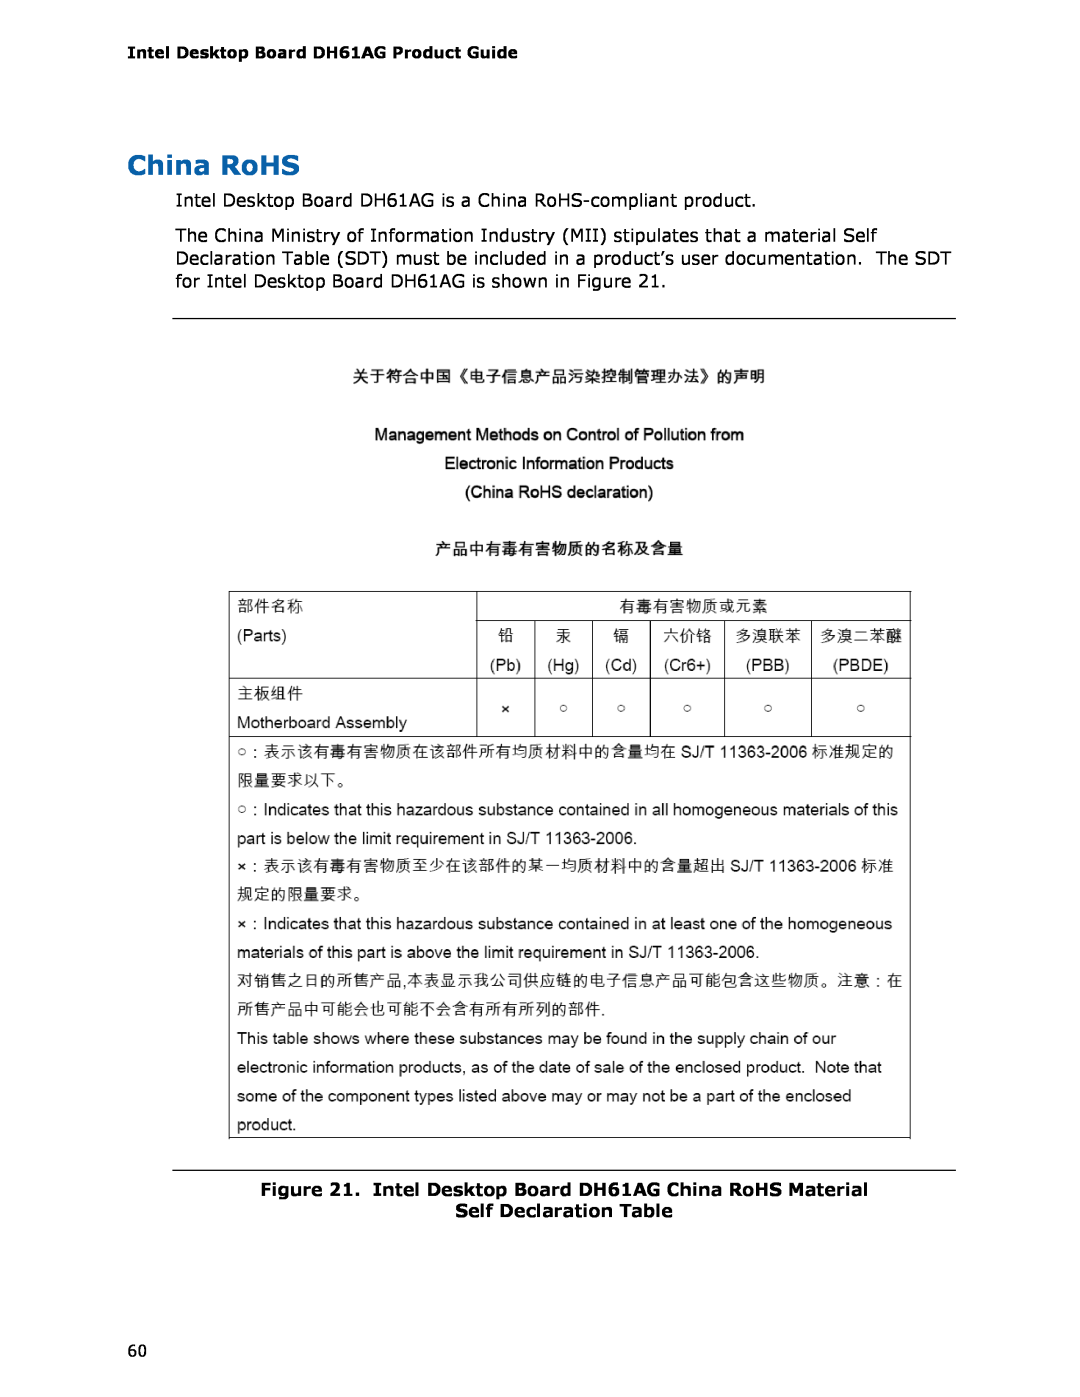 Intel BOXDH61AG manual Intel Desktop Board DH61AG China RoHS Material, Self Declaration Table 